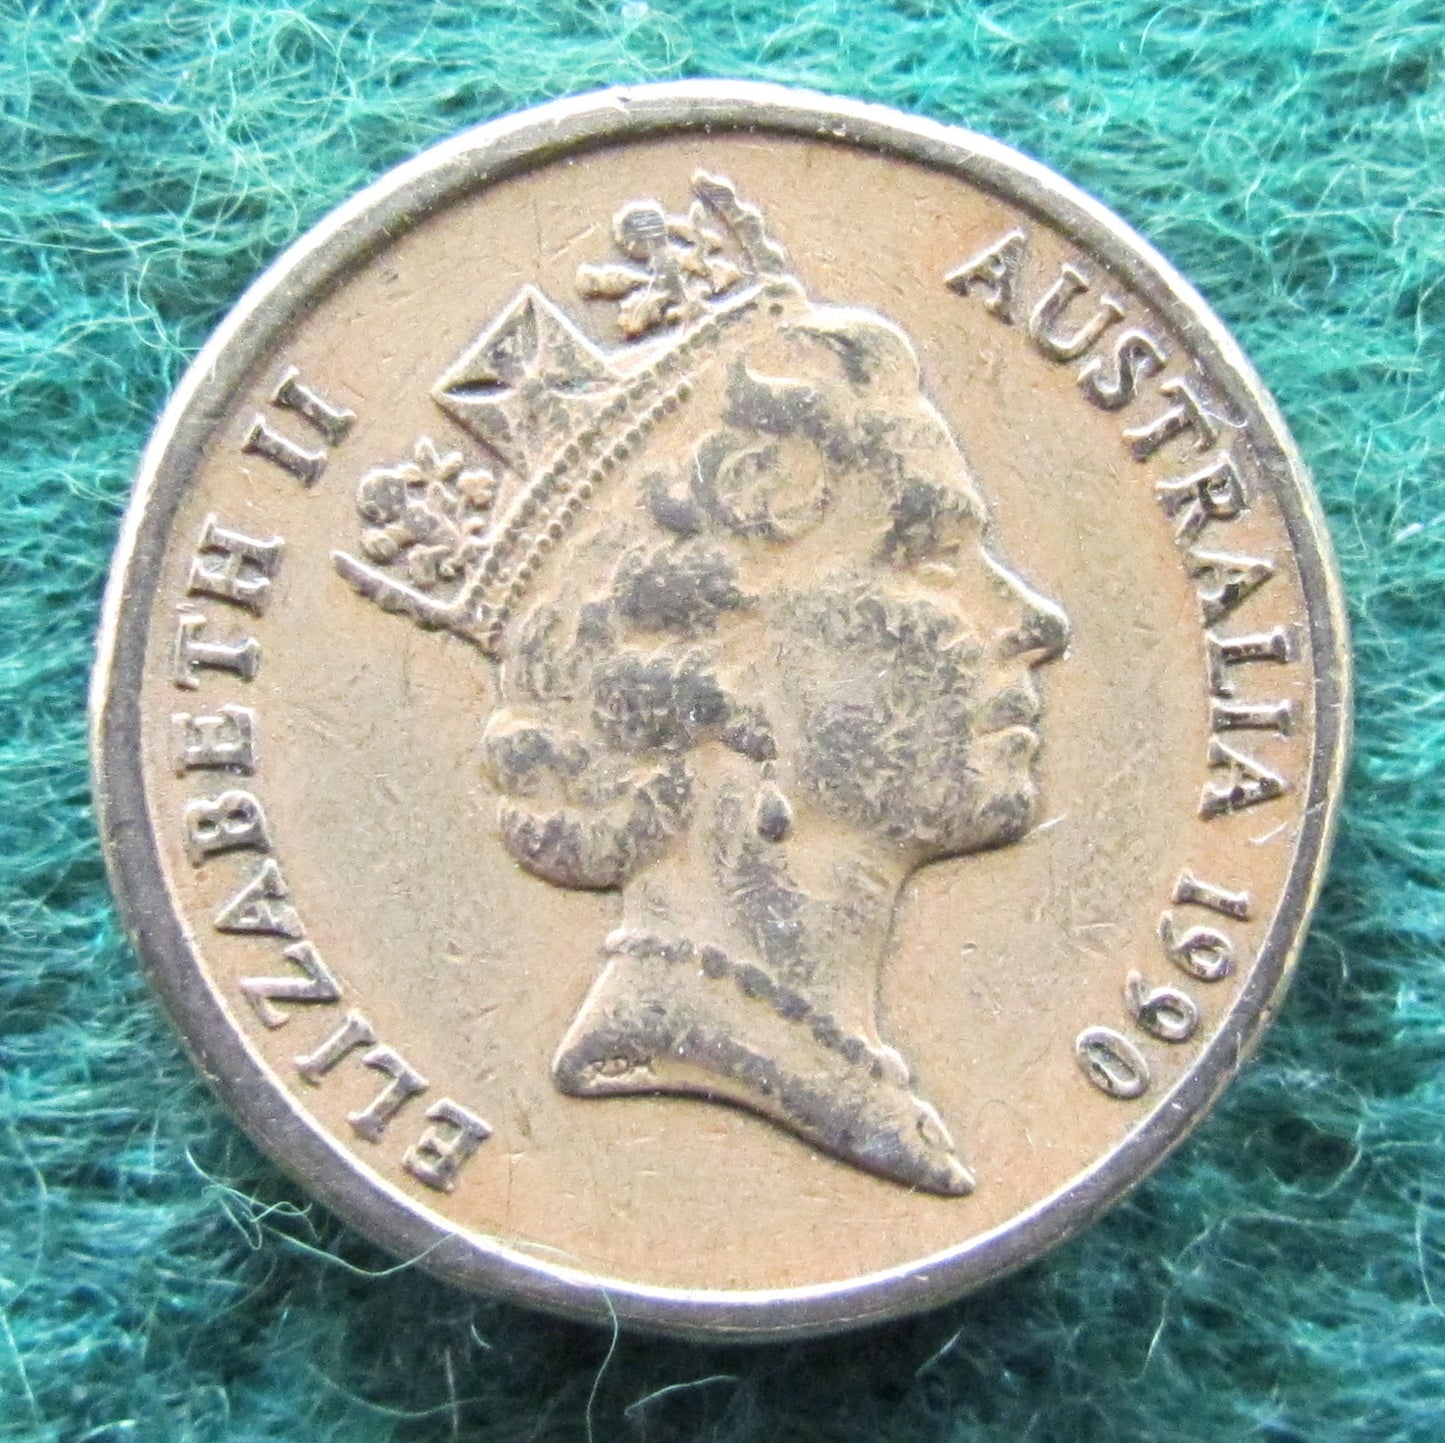 Australian 1990 2 Dollar Aboriginal Elder Queen Elizabeth Coin - Circulated